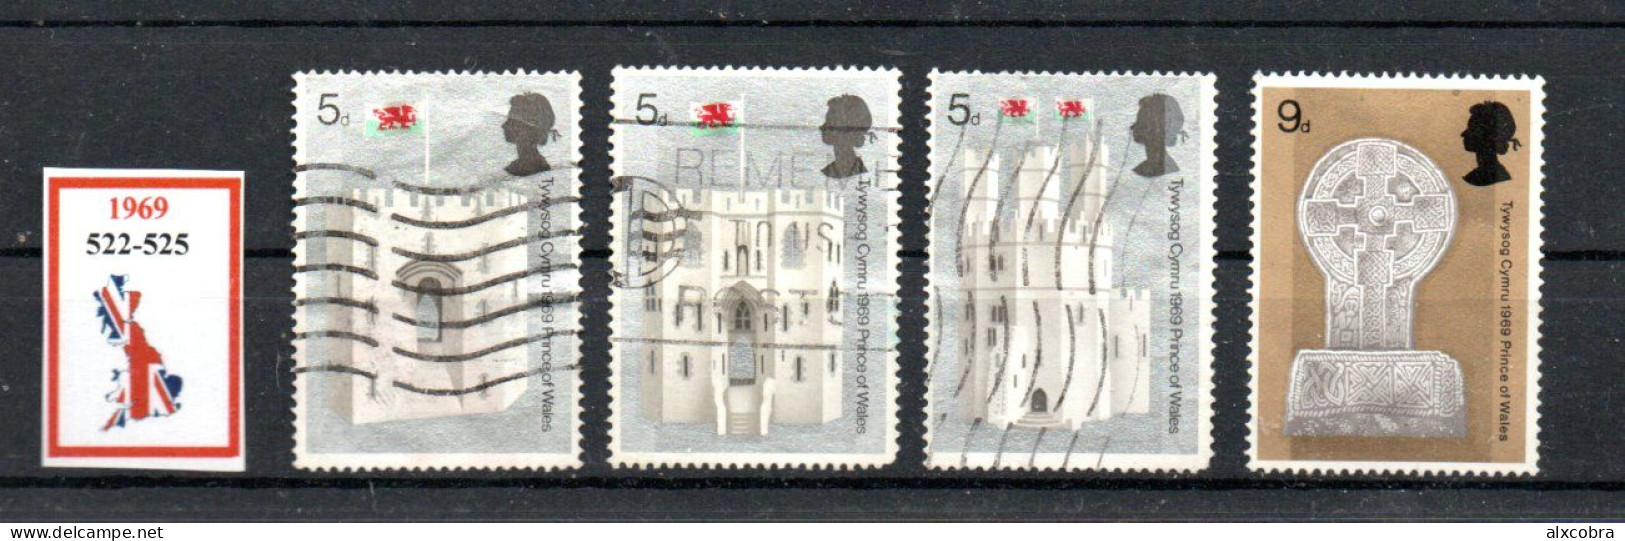 United Kingdom Castles 1969 Michel 522-525 3used 1MNH - Usados